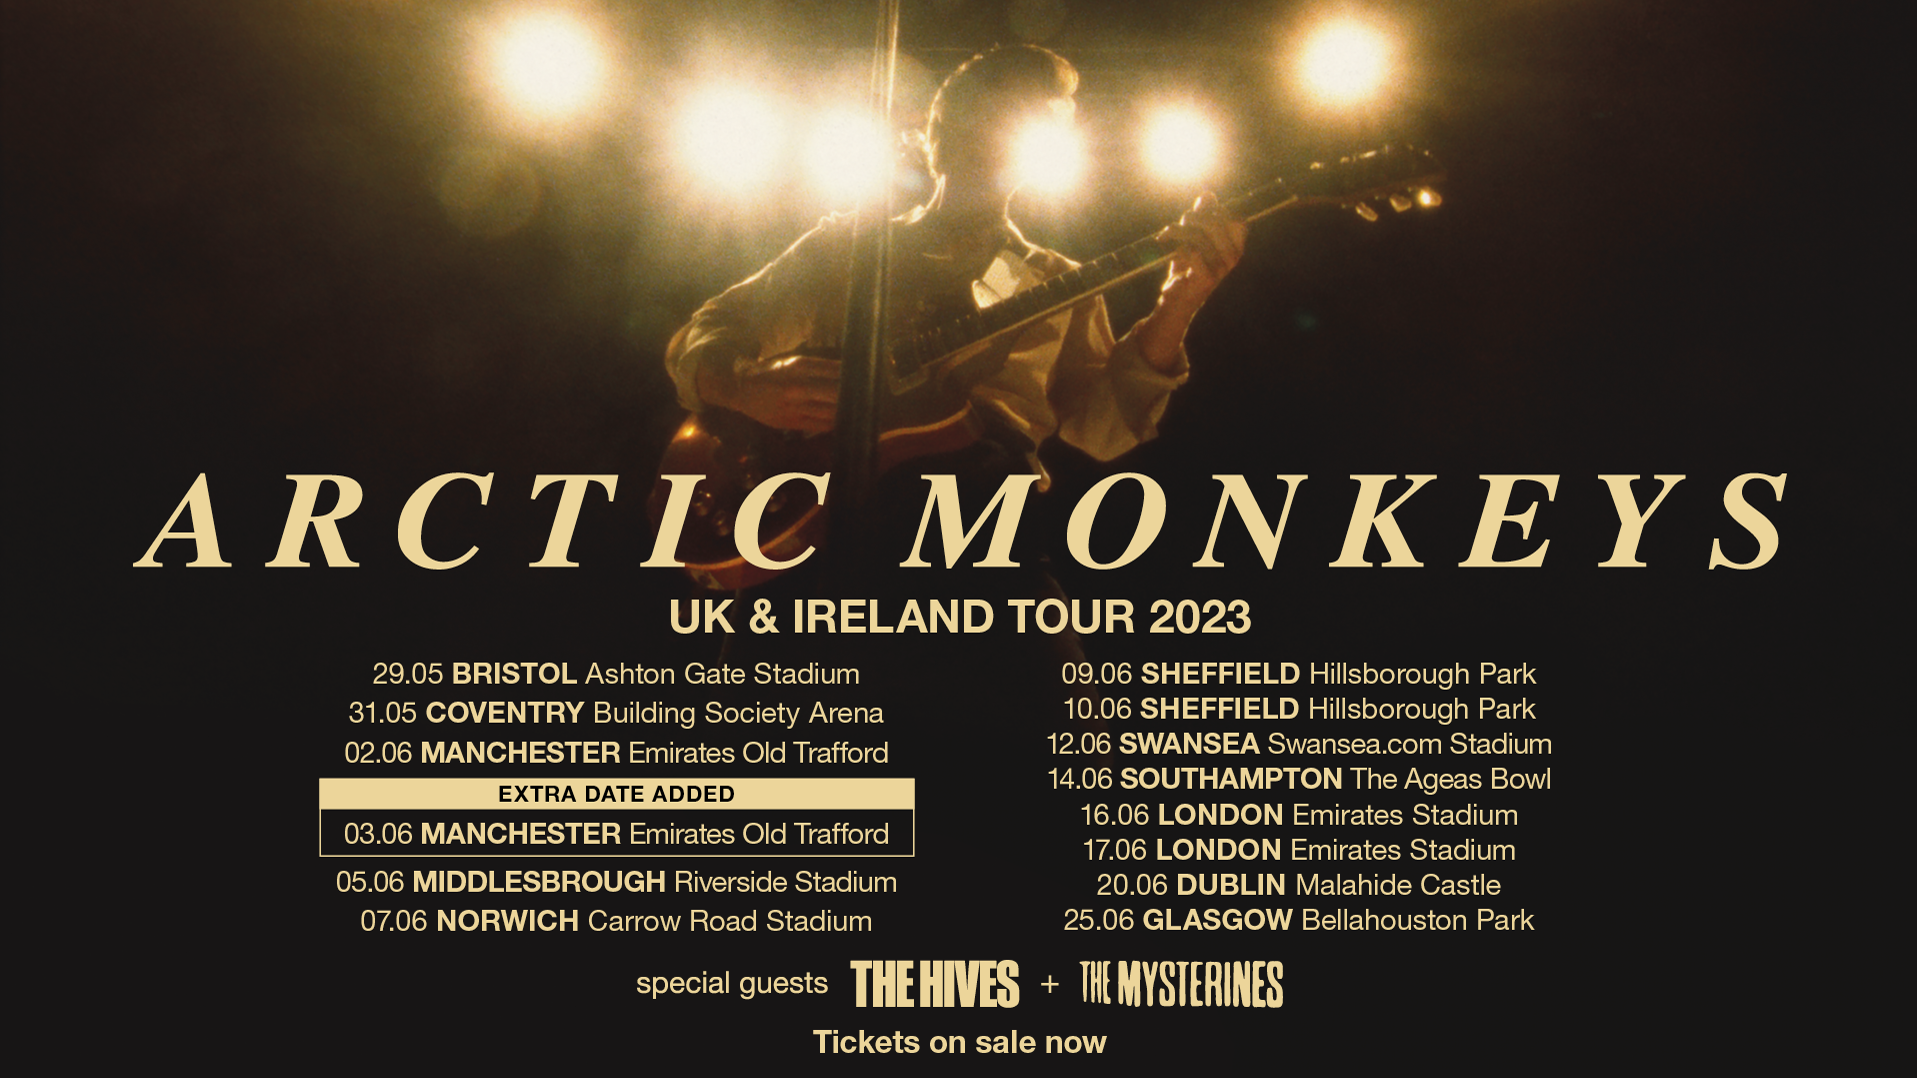 Arctic Monkeys Tickets on sale